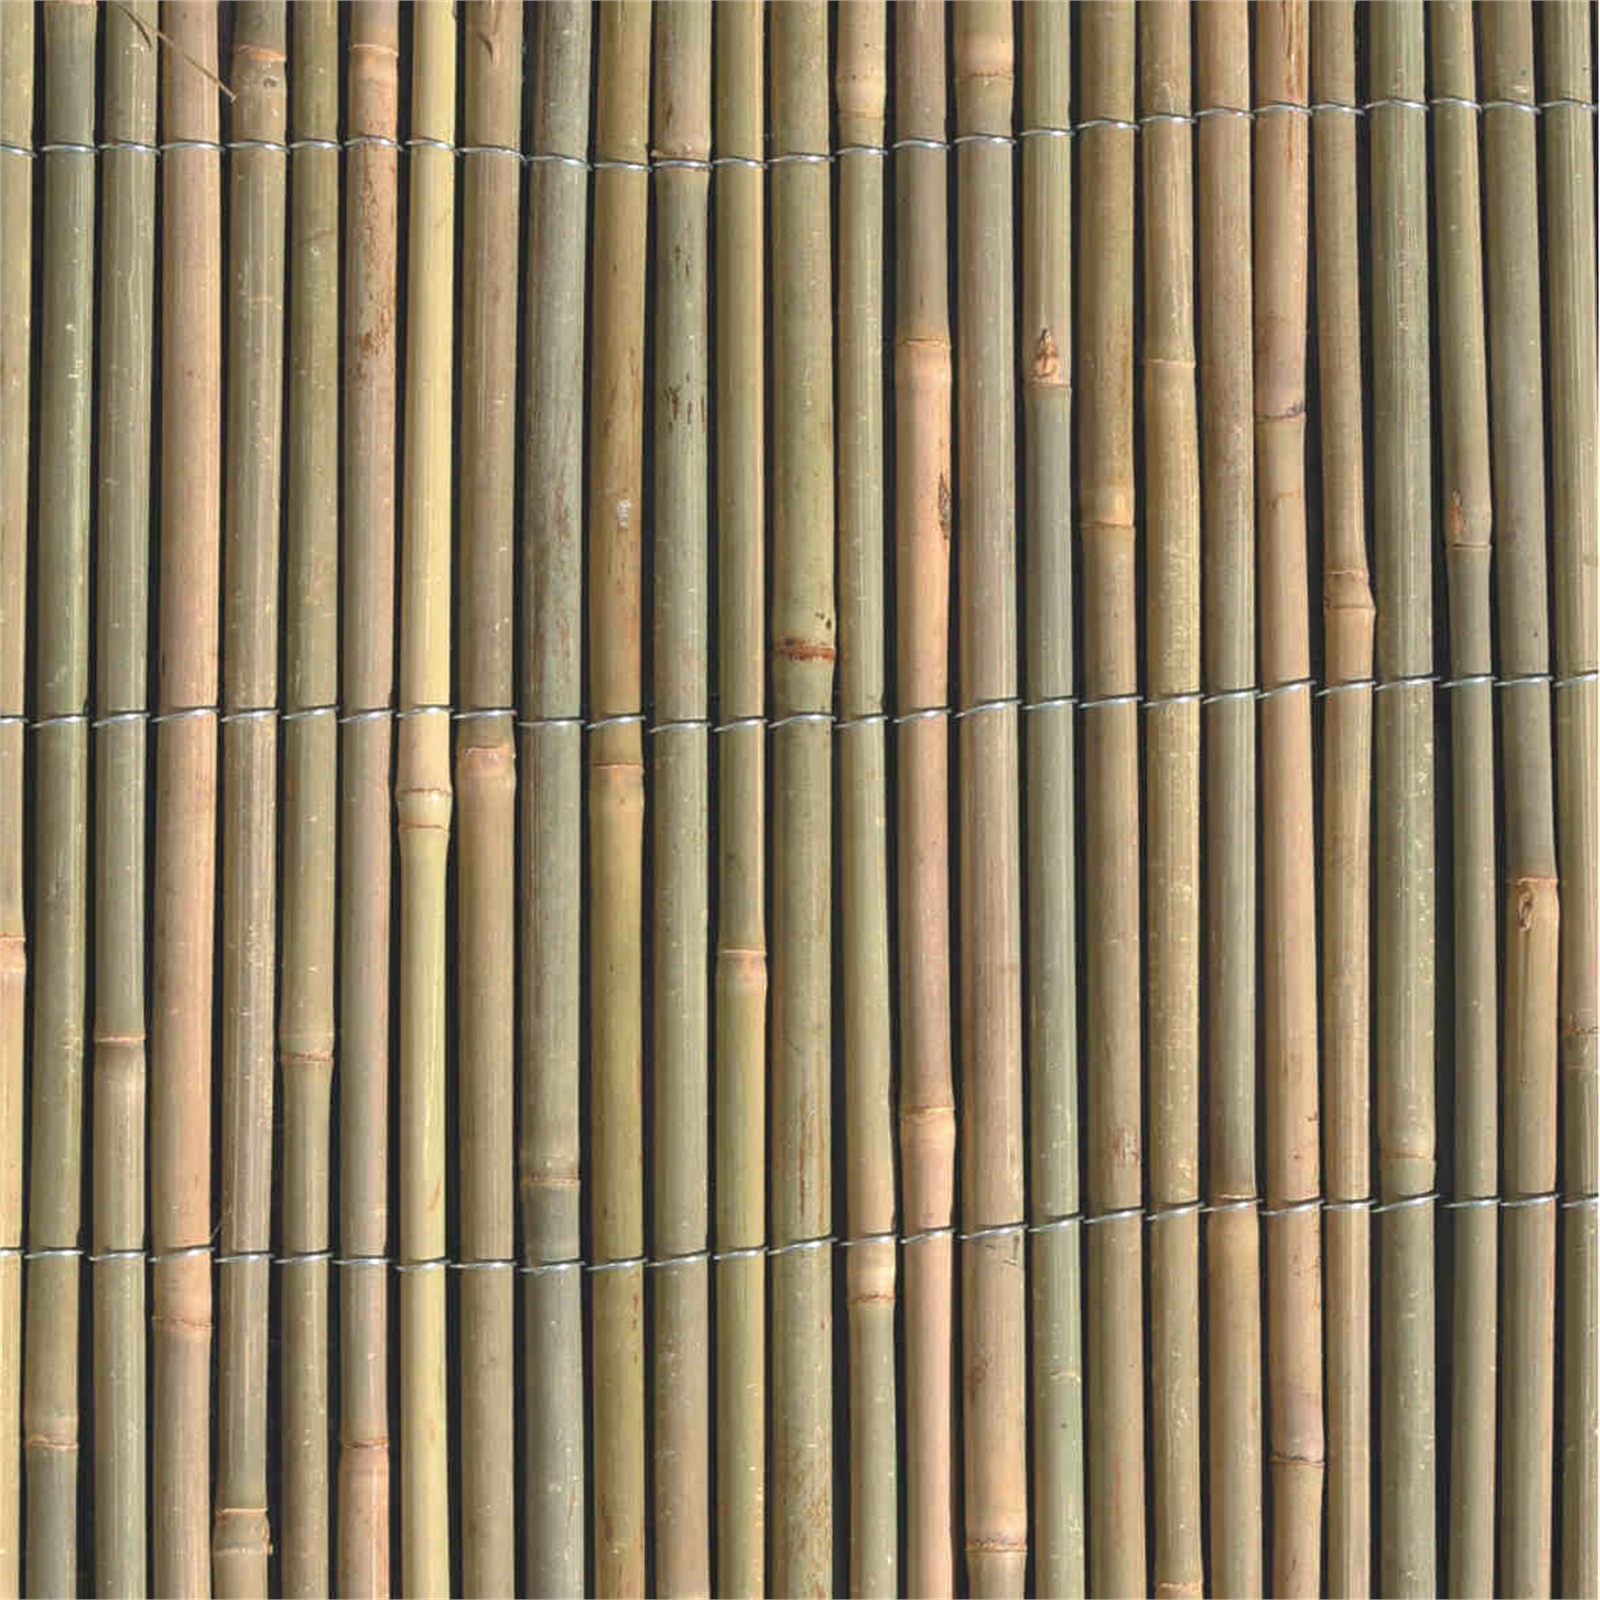 Garden Trend 3 x 1m Round Bamboo Fence Screening